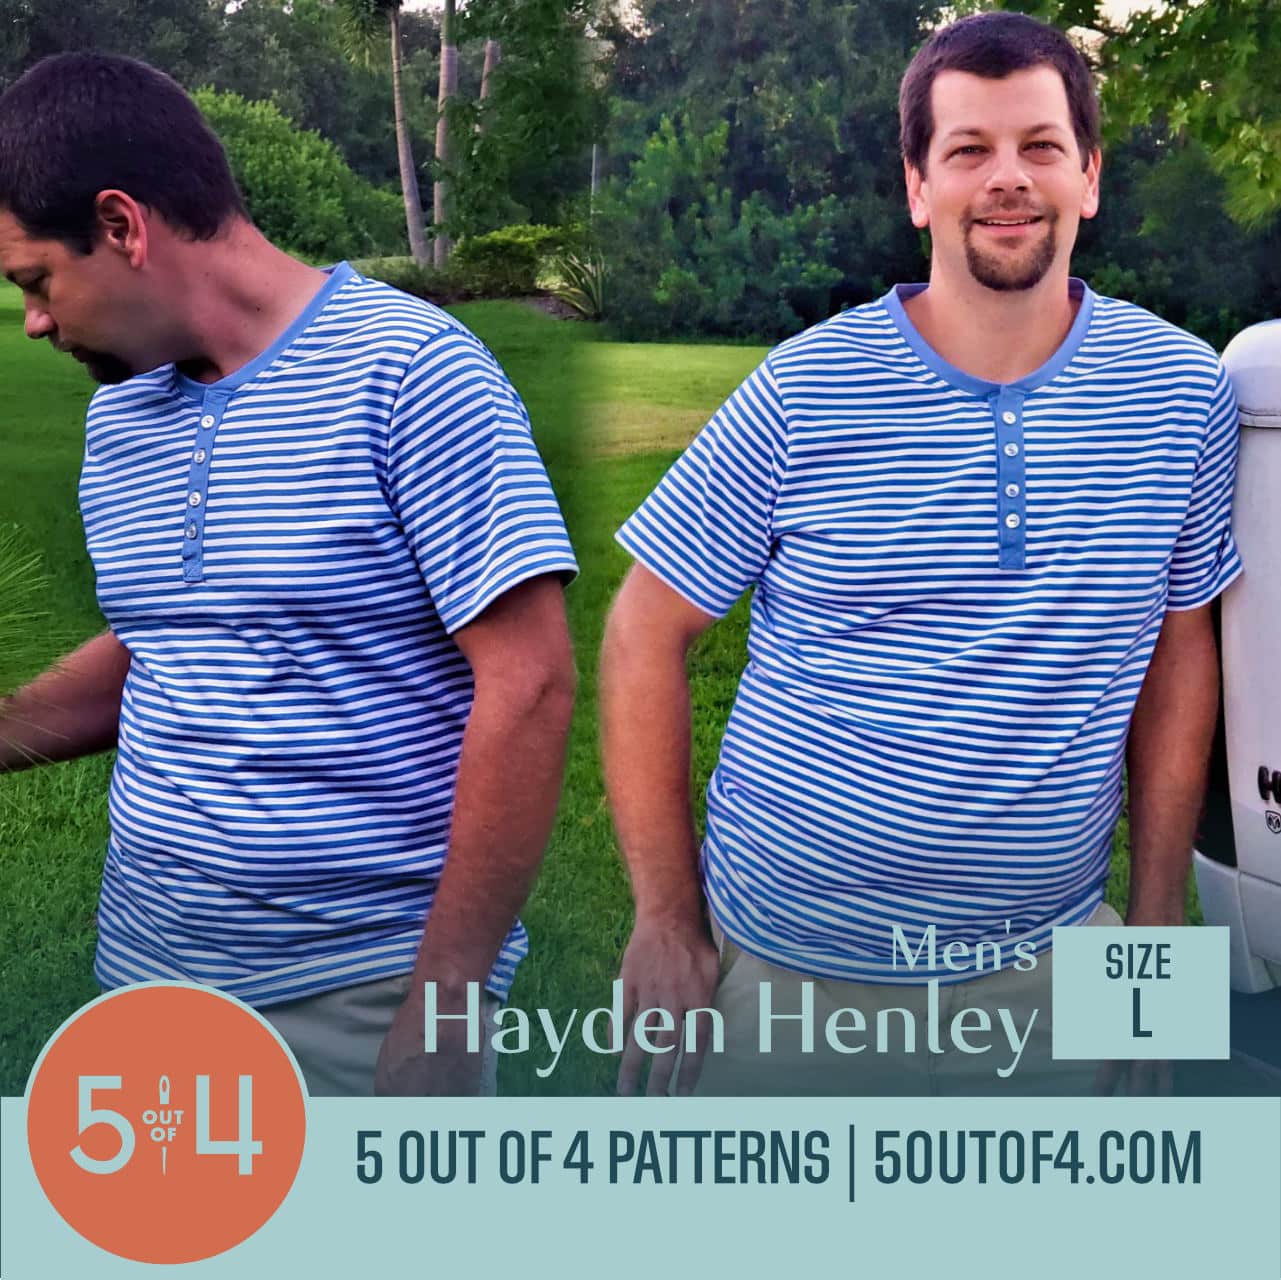 Men's Hayden Henley - 5 out of 4 Patterns